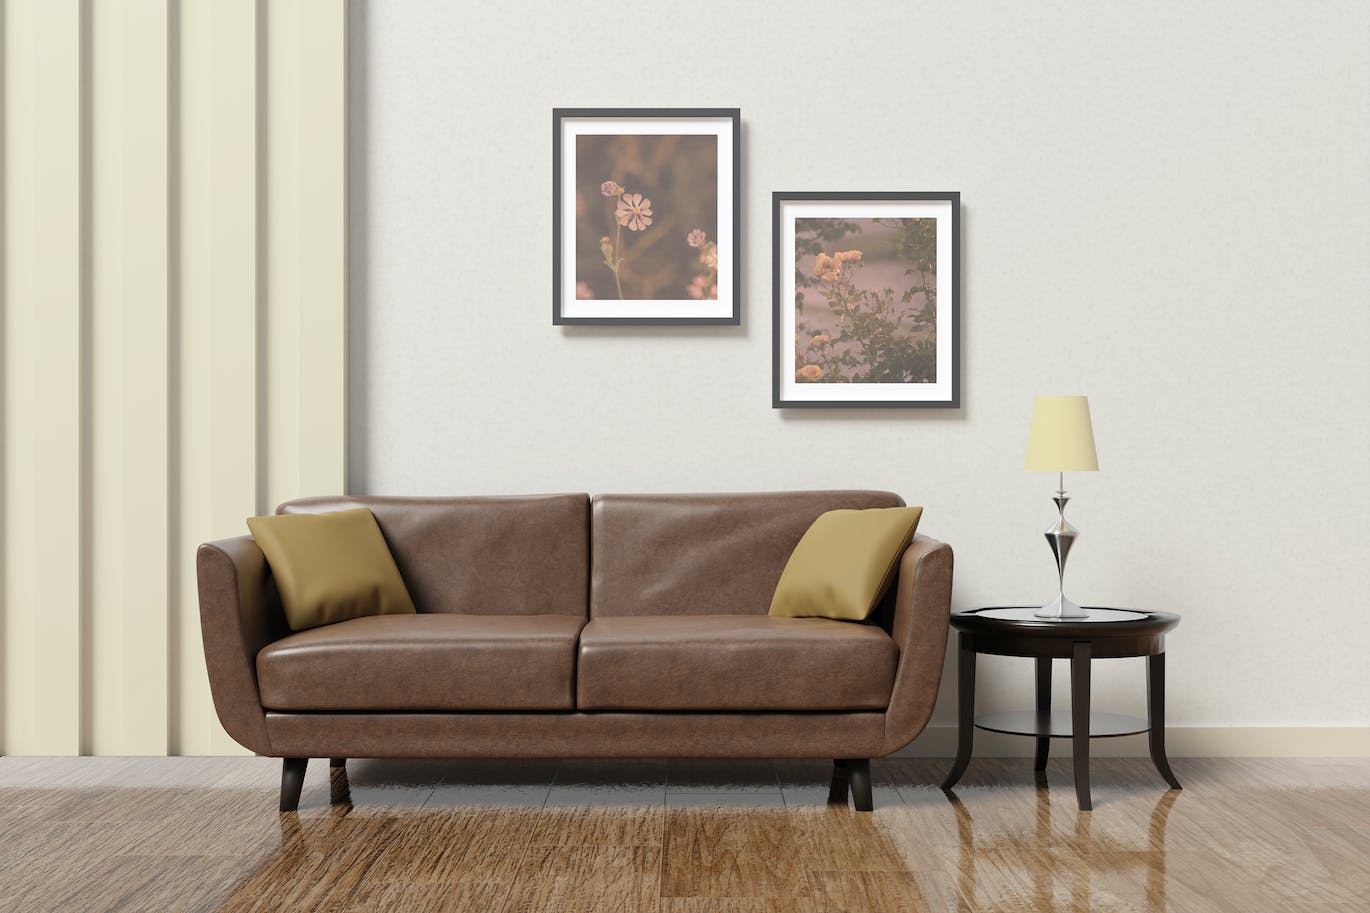 客厅极简画框相框样机 Minimalist Frame Mockup in Living Room 样机素材 第1张